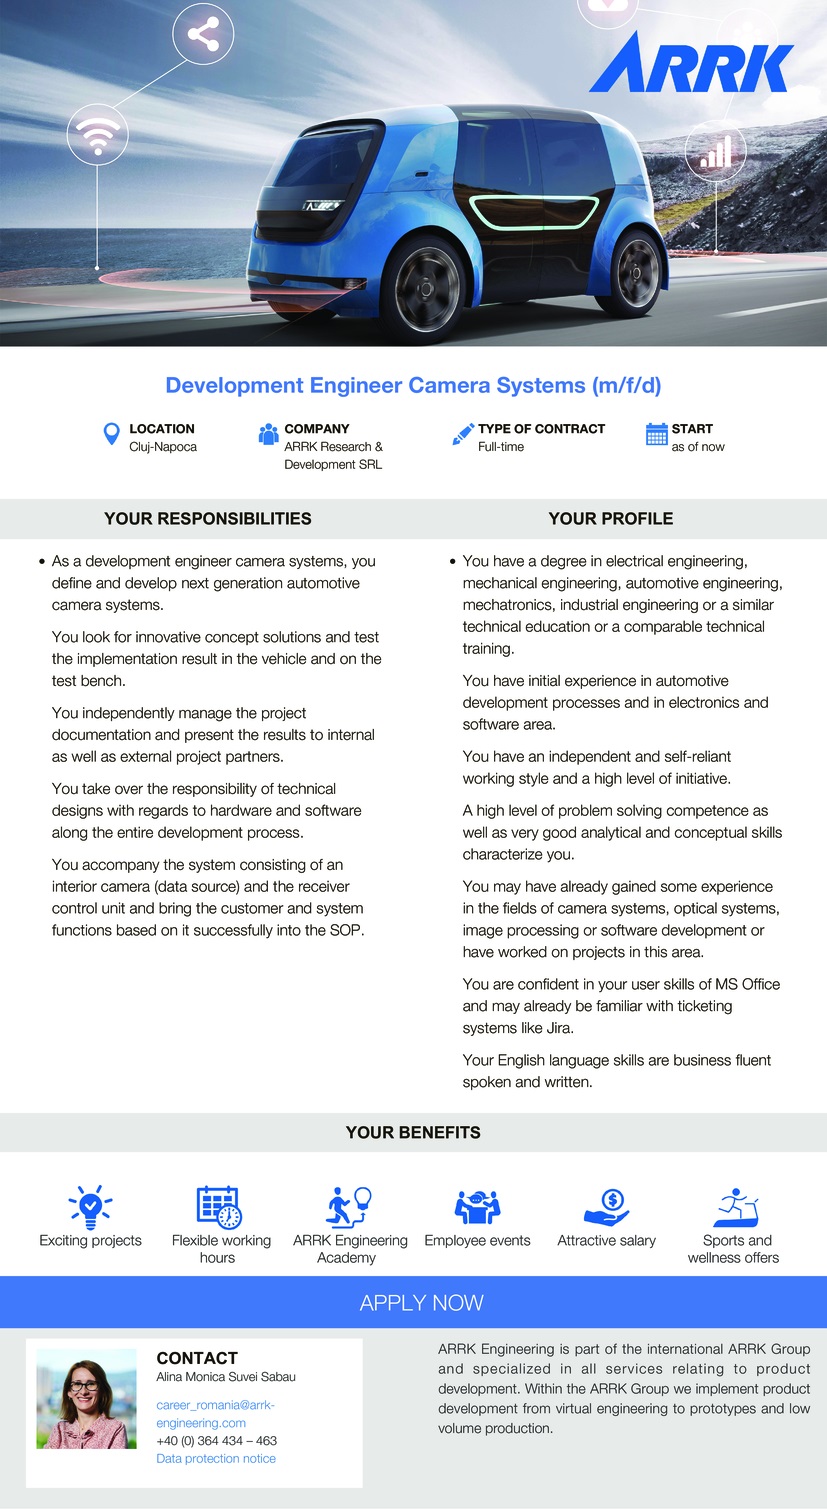 Development Engineer Camera Systems (m/f/d)